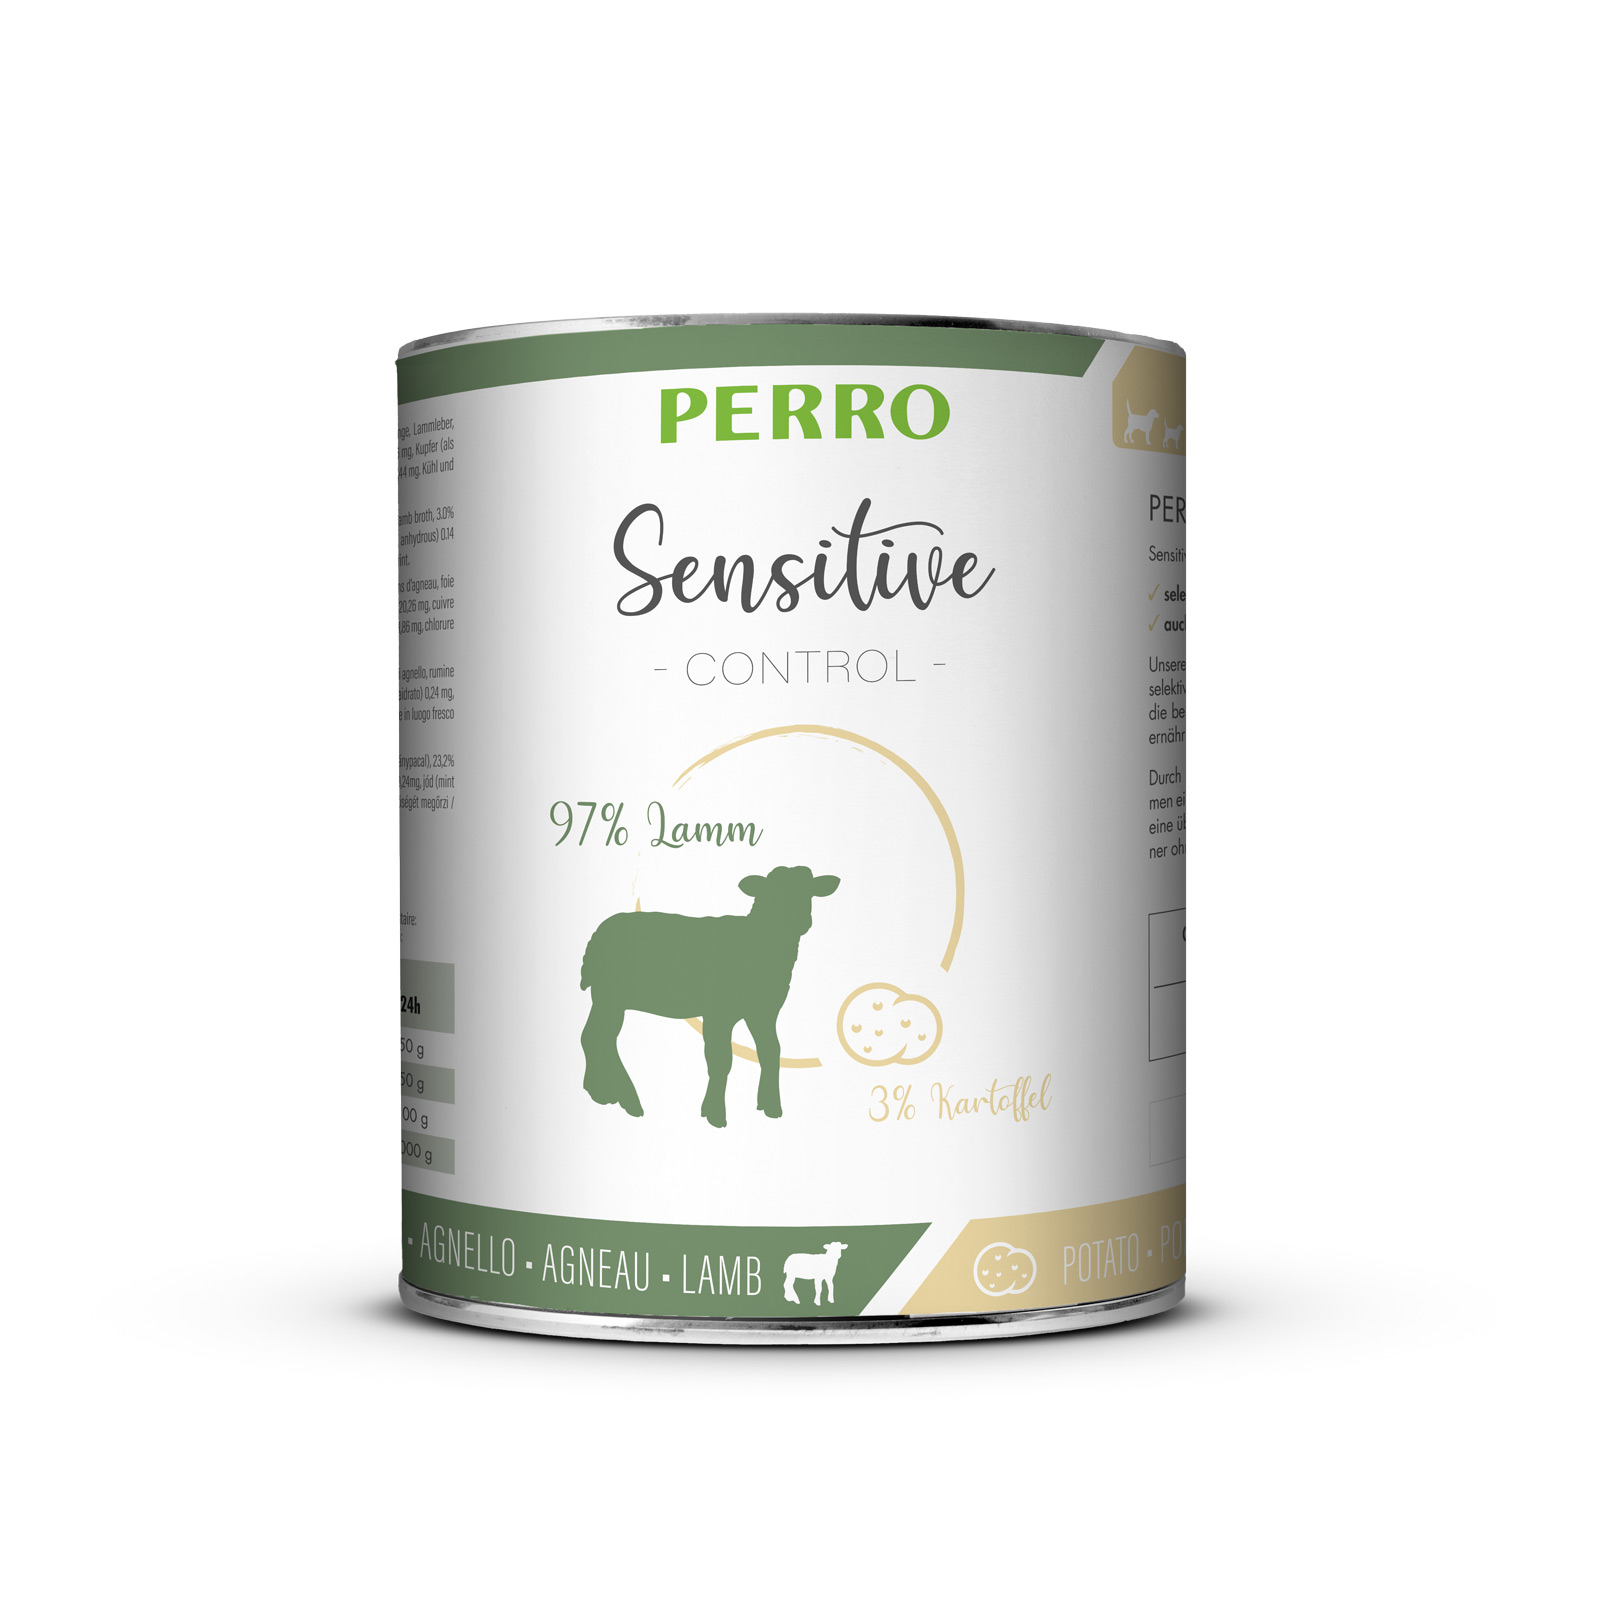 PERRO Sensitive Control Lamm + Kartoffeln